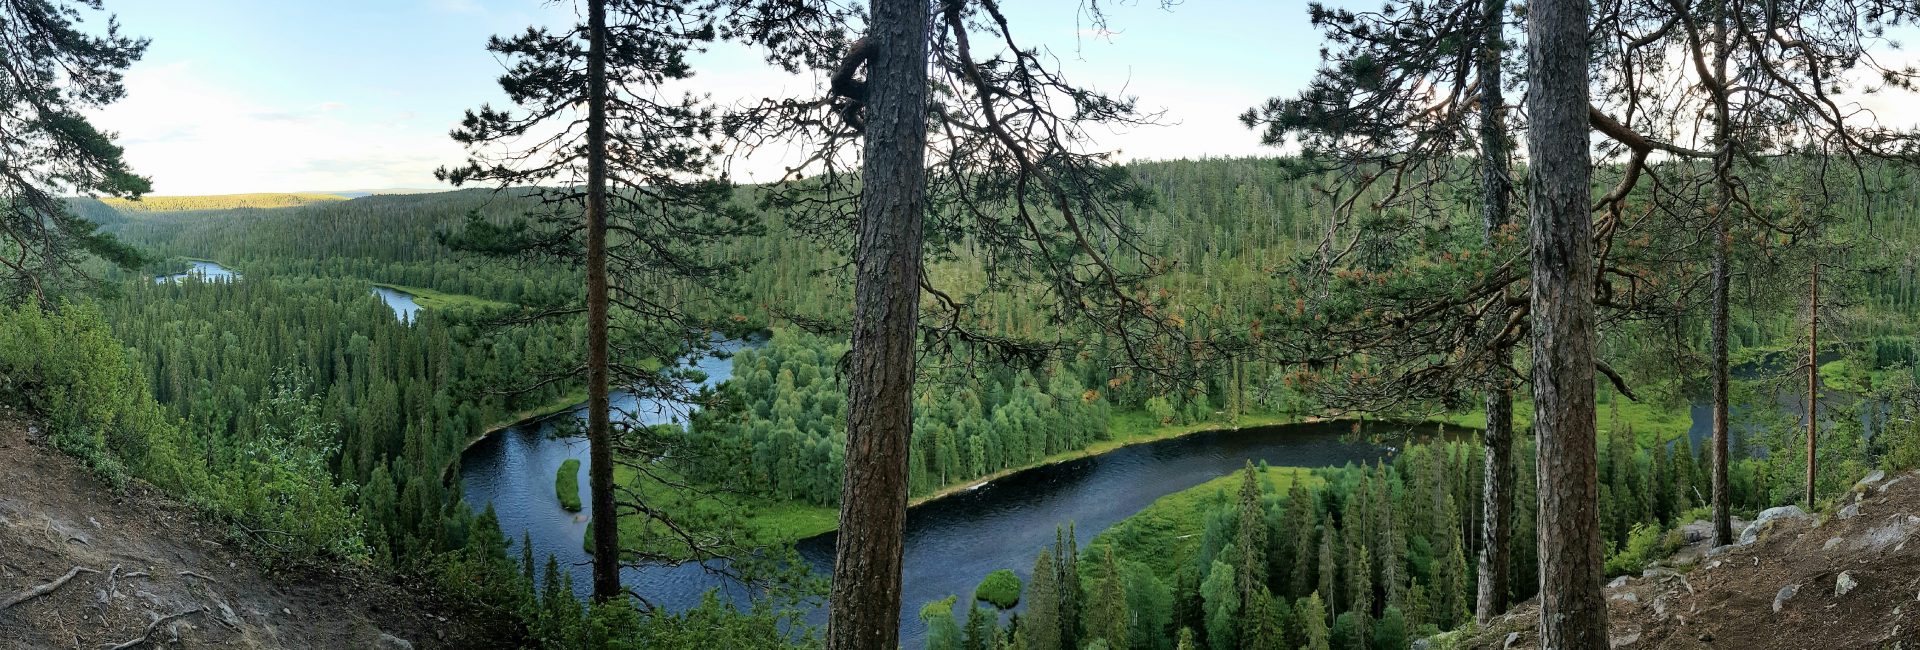 Incredible views over Oulanka National park and Pähkänänkallio